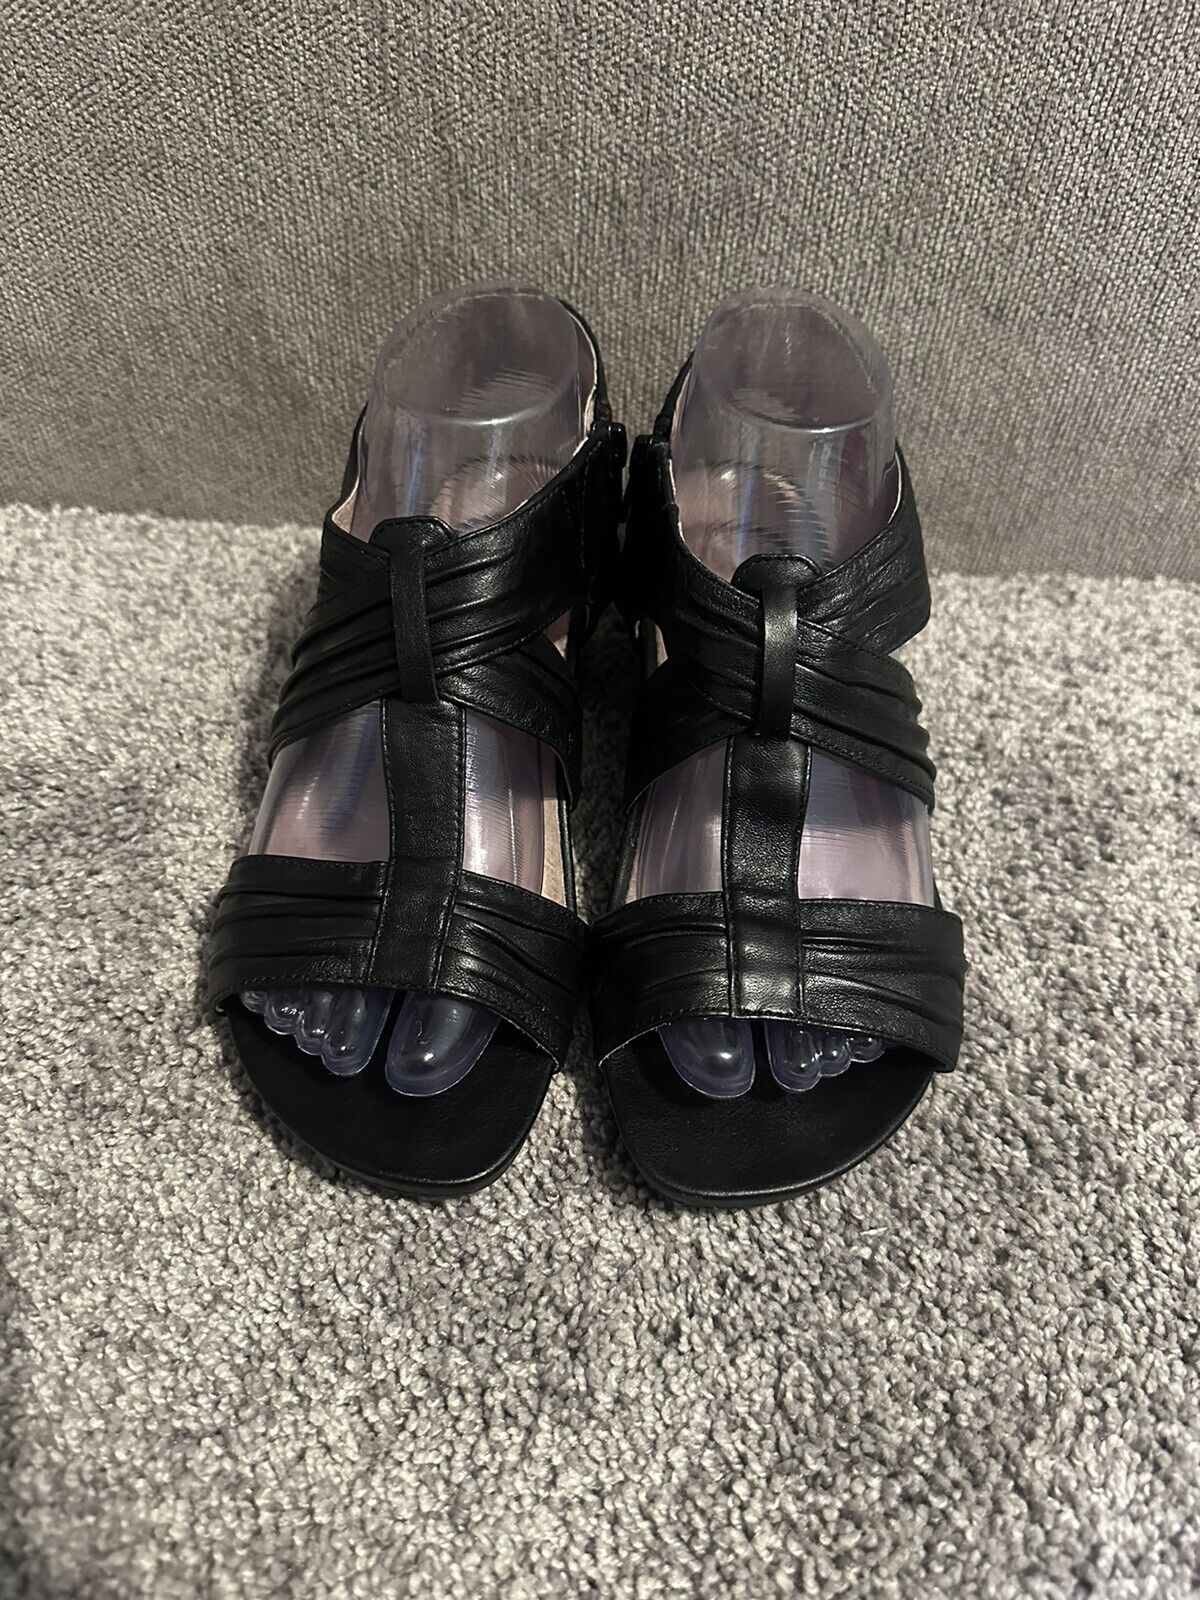 Abeo Women’s Black Leather Wedge Sandal Size 7 - image 2